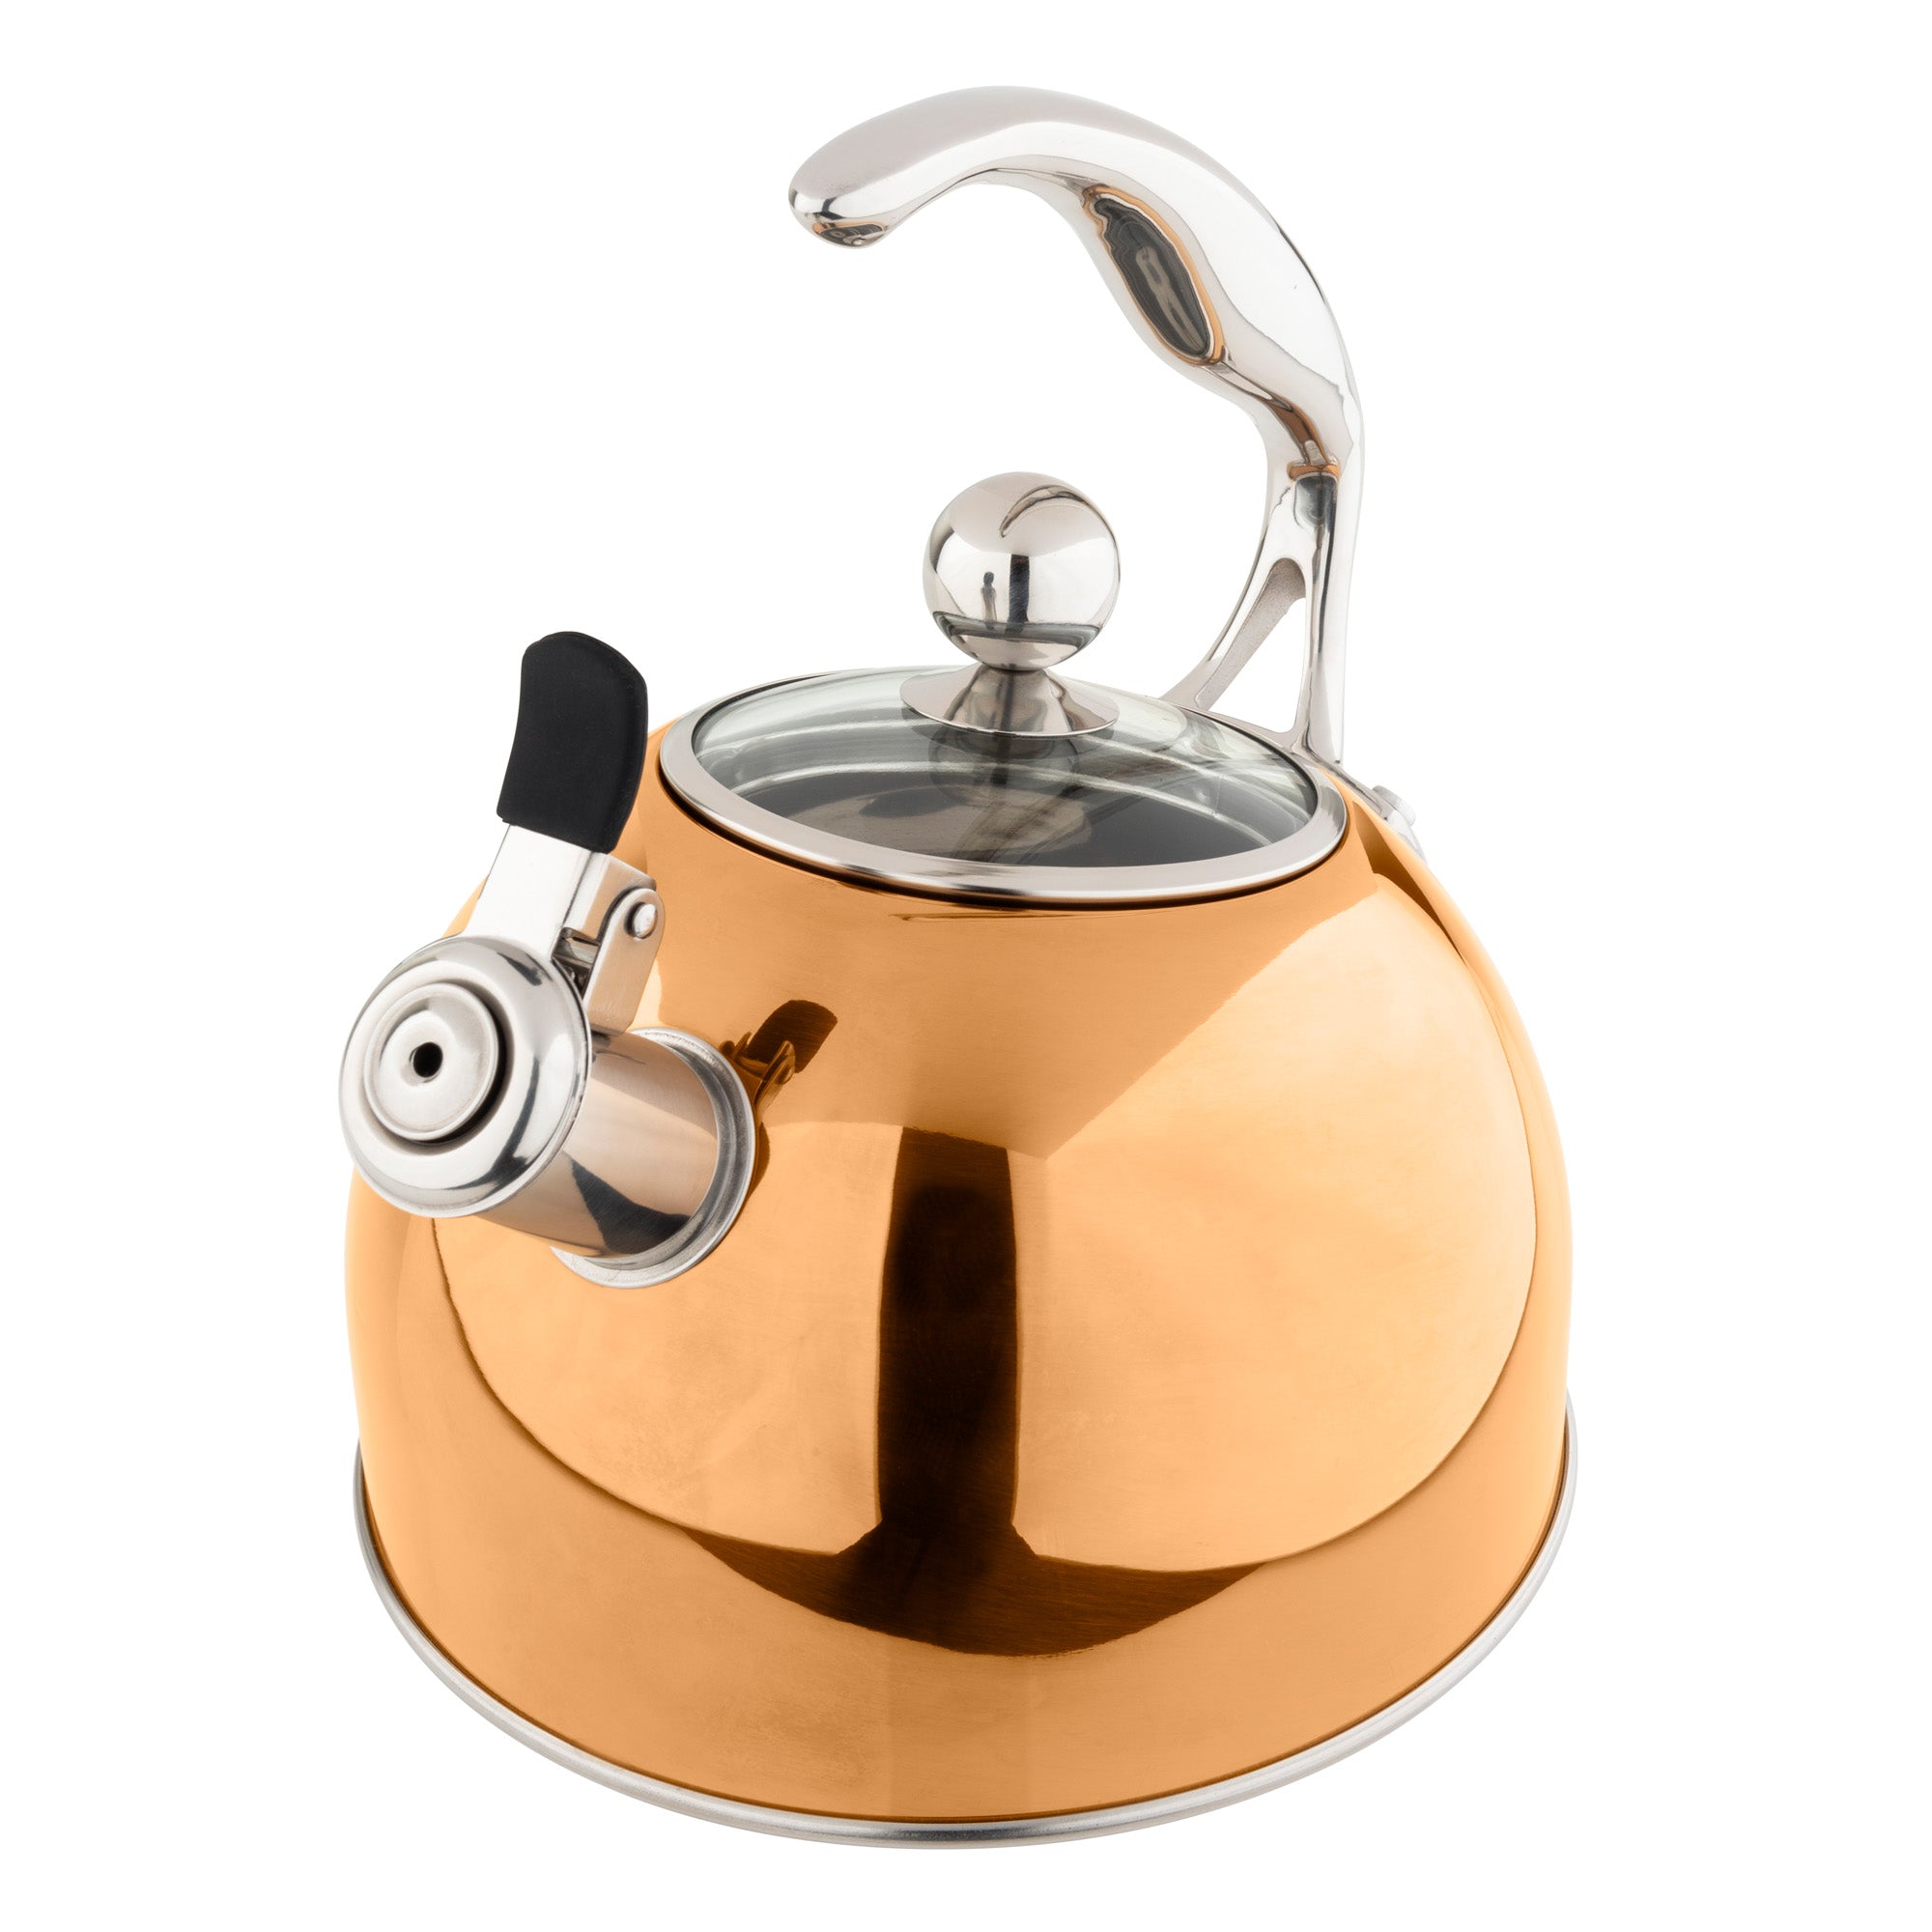 Norpro 2.6 Quart Whistling Tea Kettle